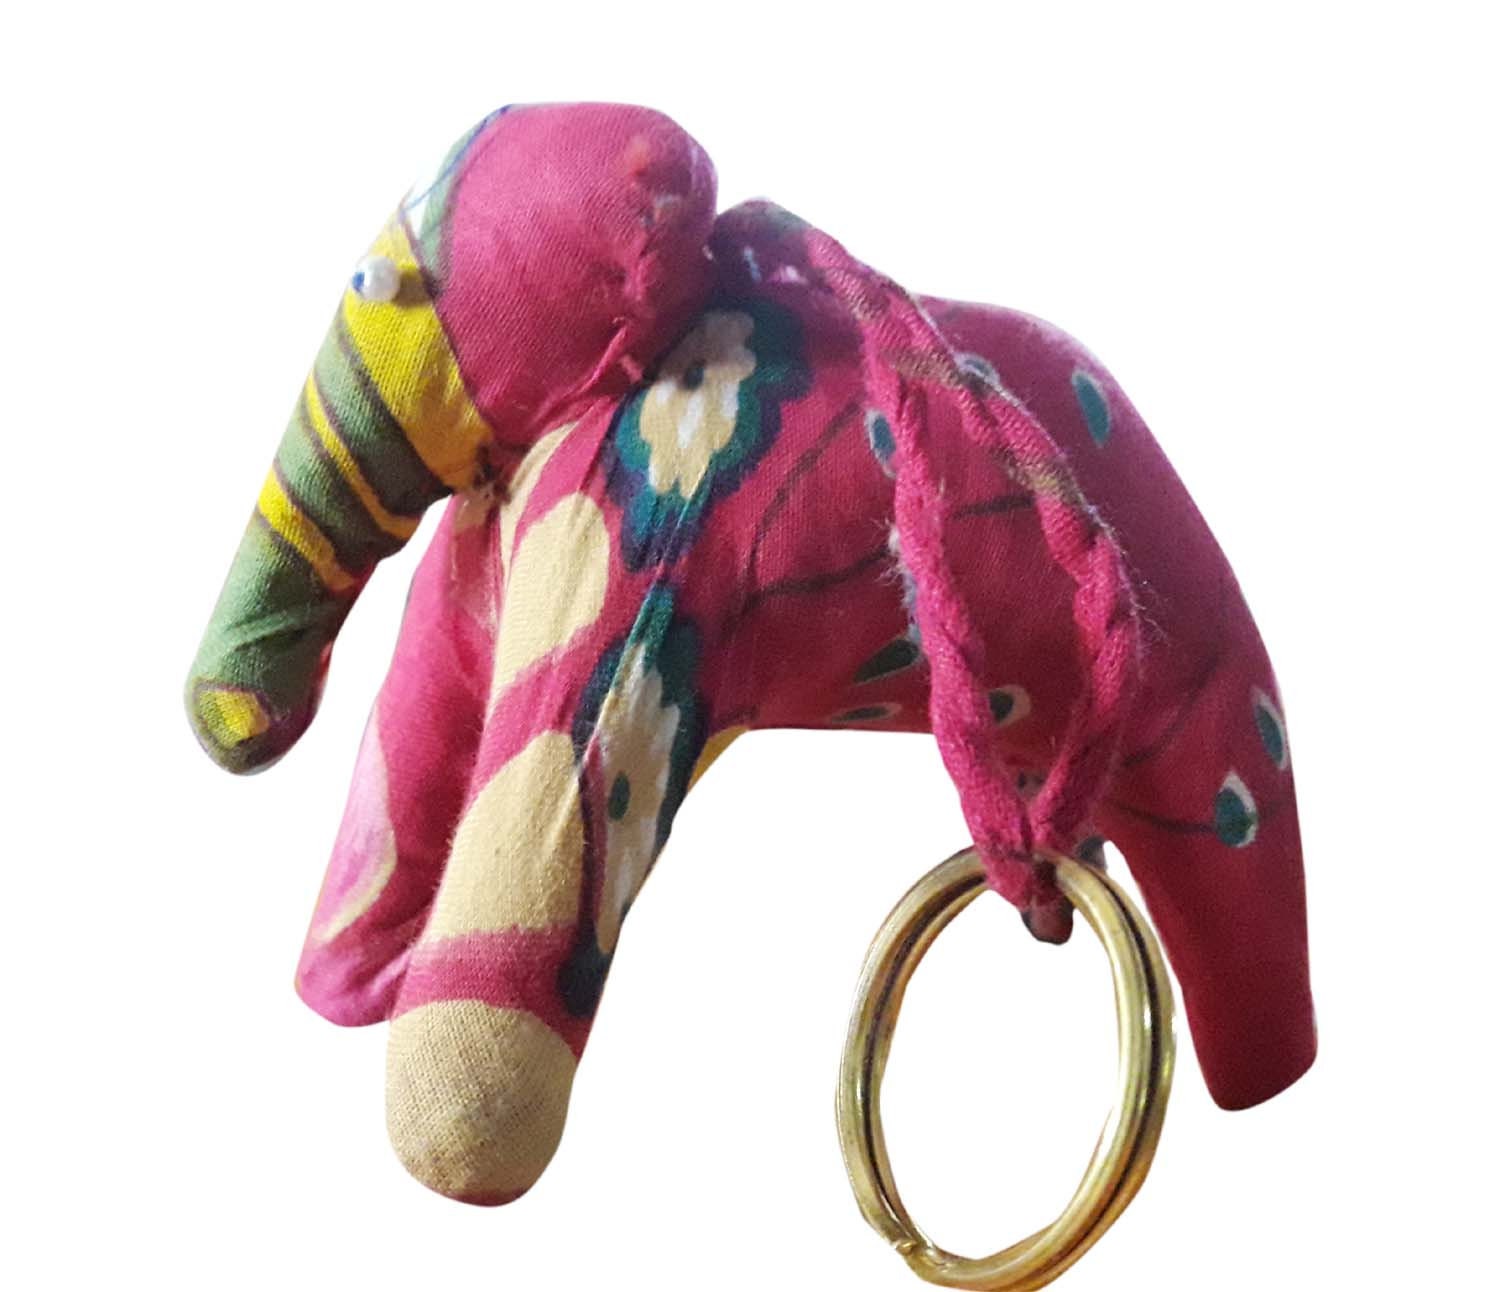 Wholesale Lot Cute Elephant Mixed Colors Fabric Toy Elephant | Etsy